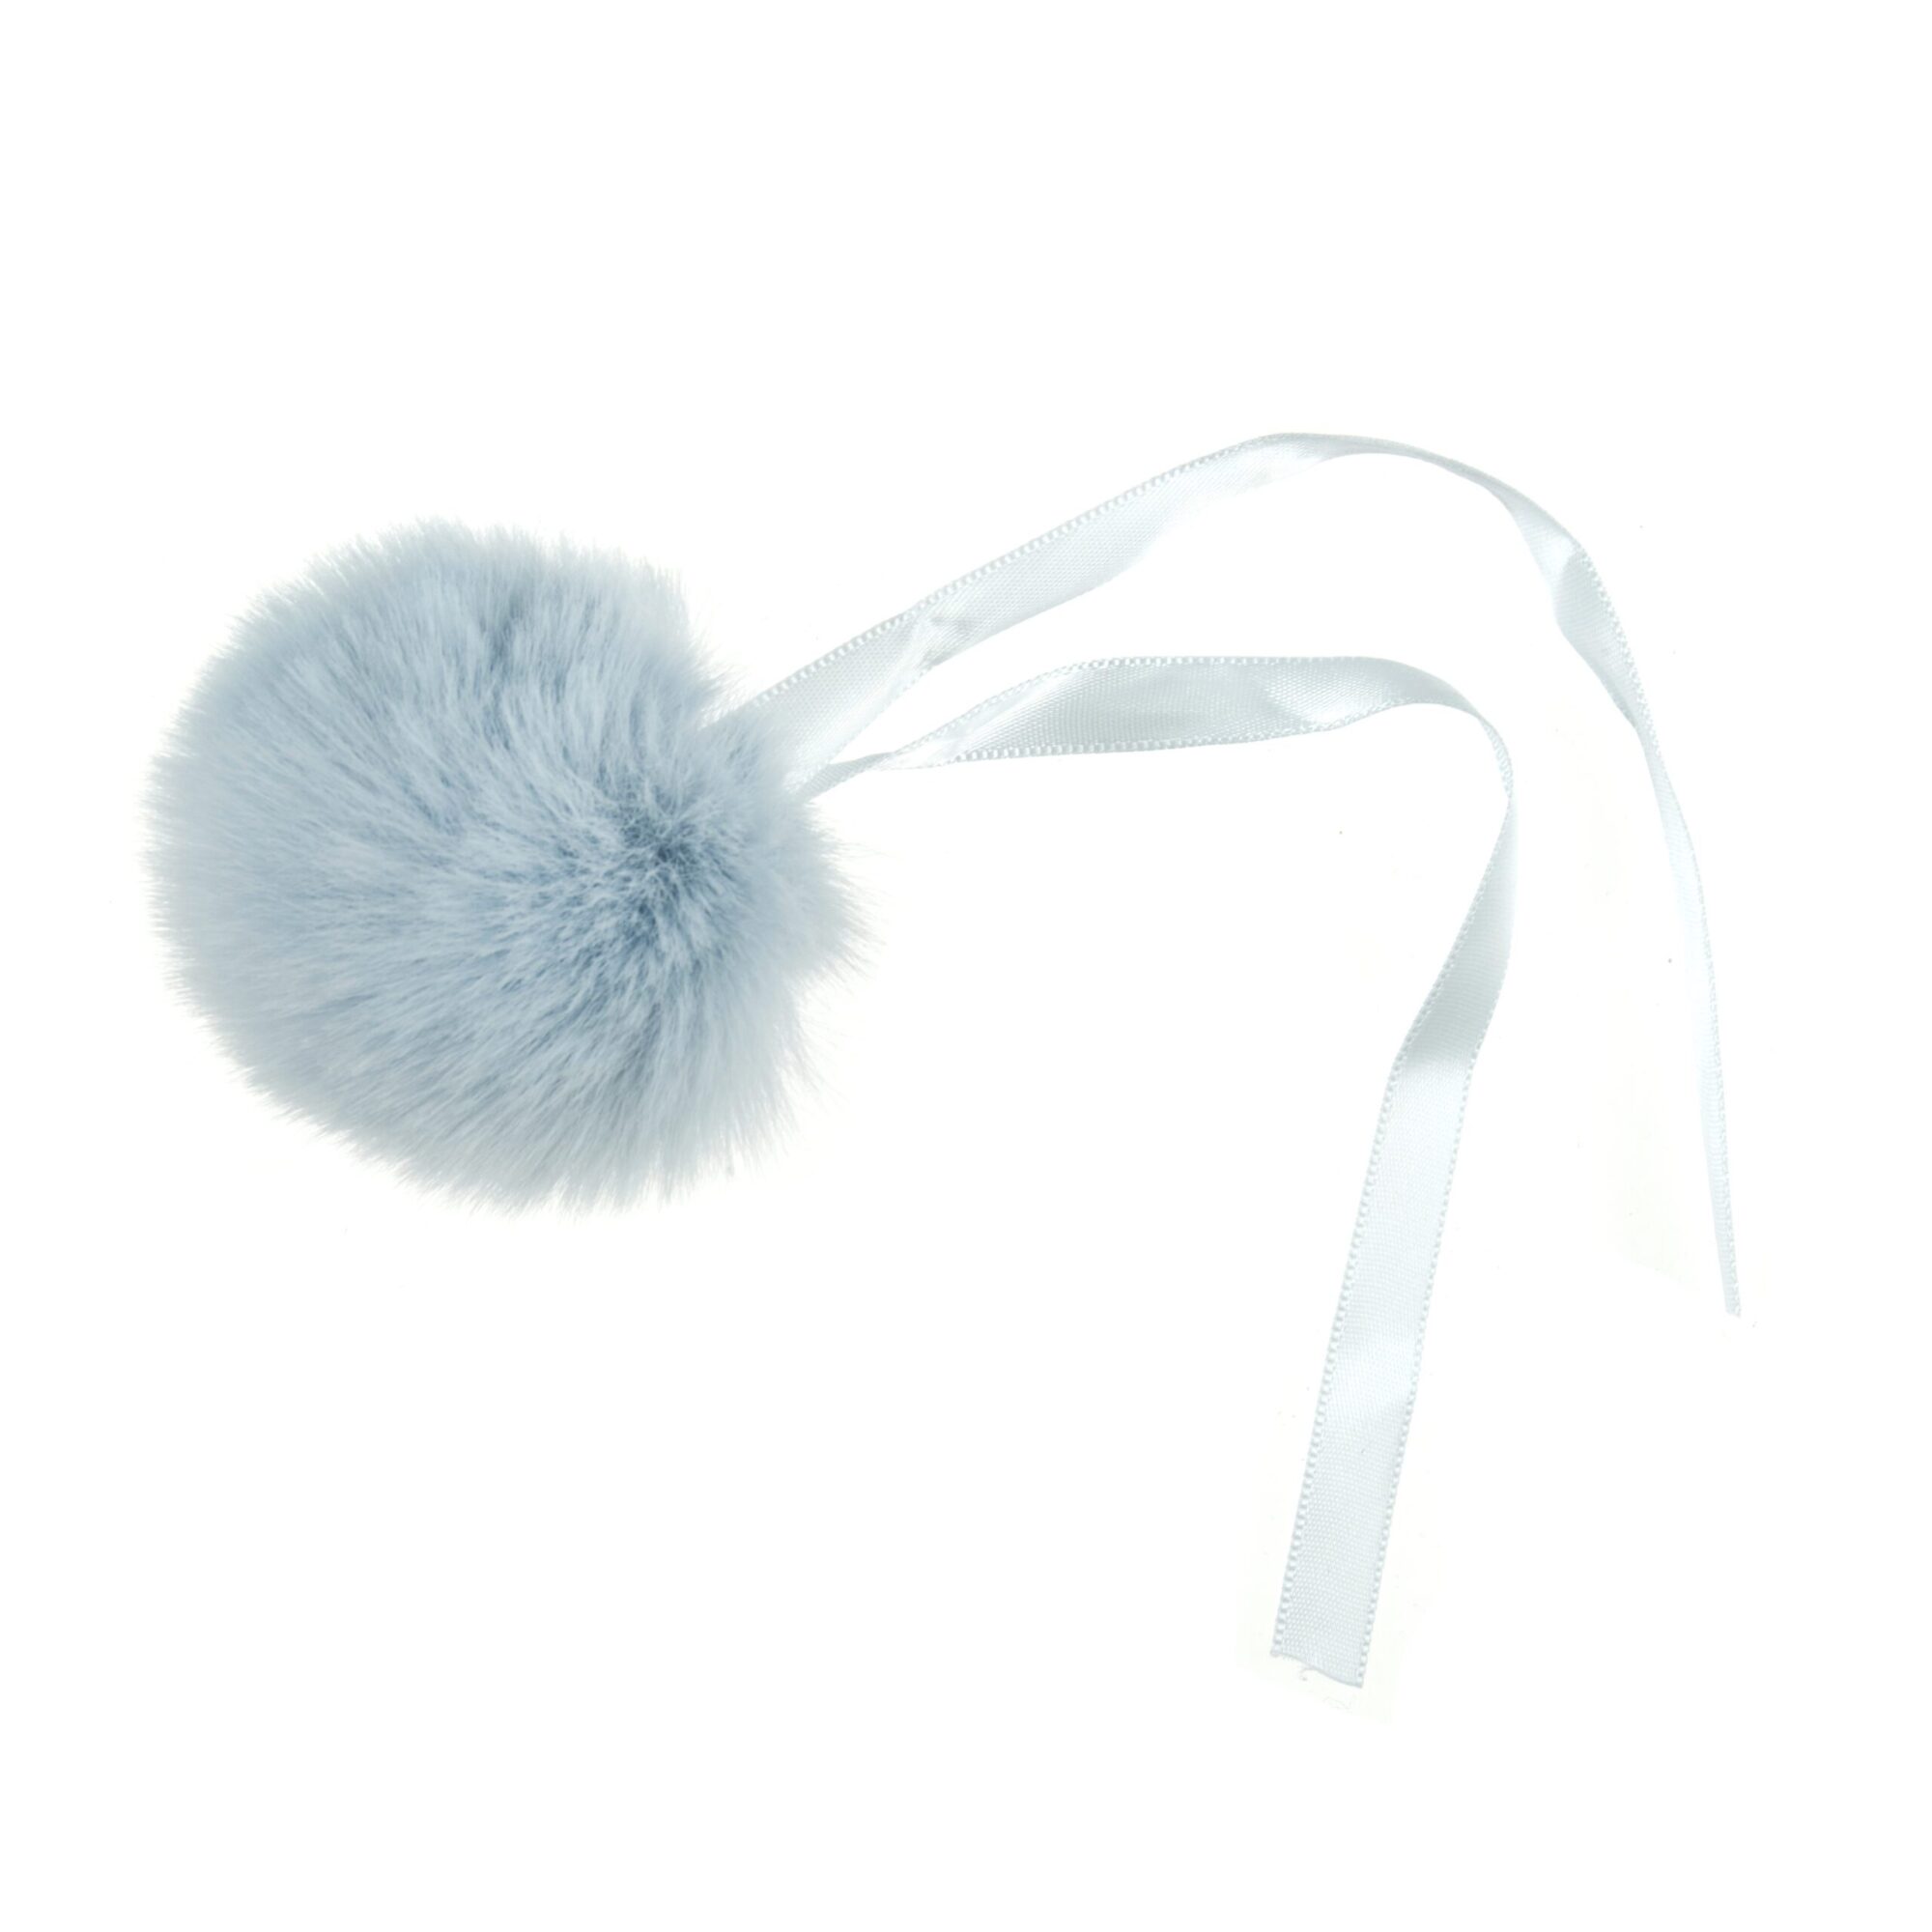 Medium Faux Fur Pom Pom 6cm - Light Blue product image